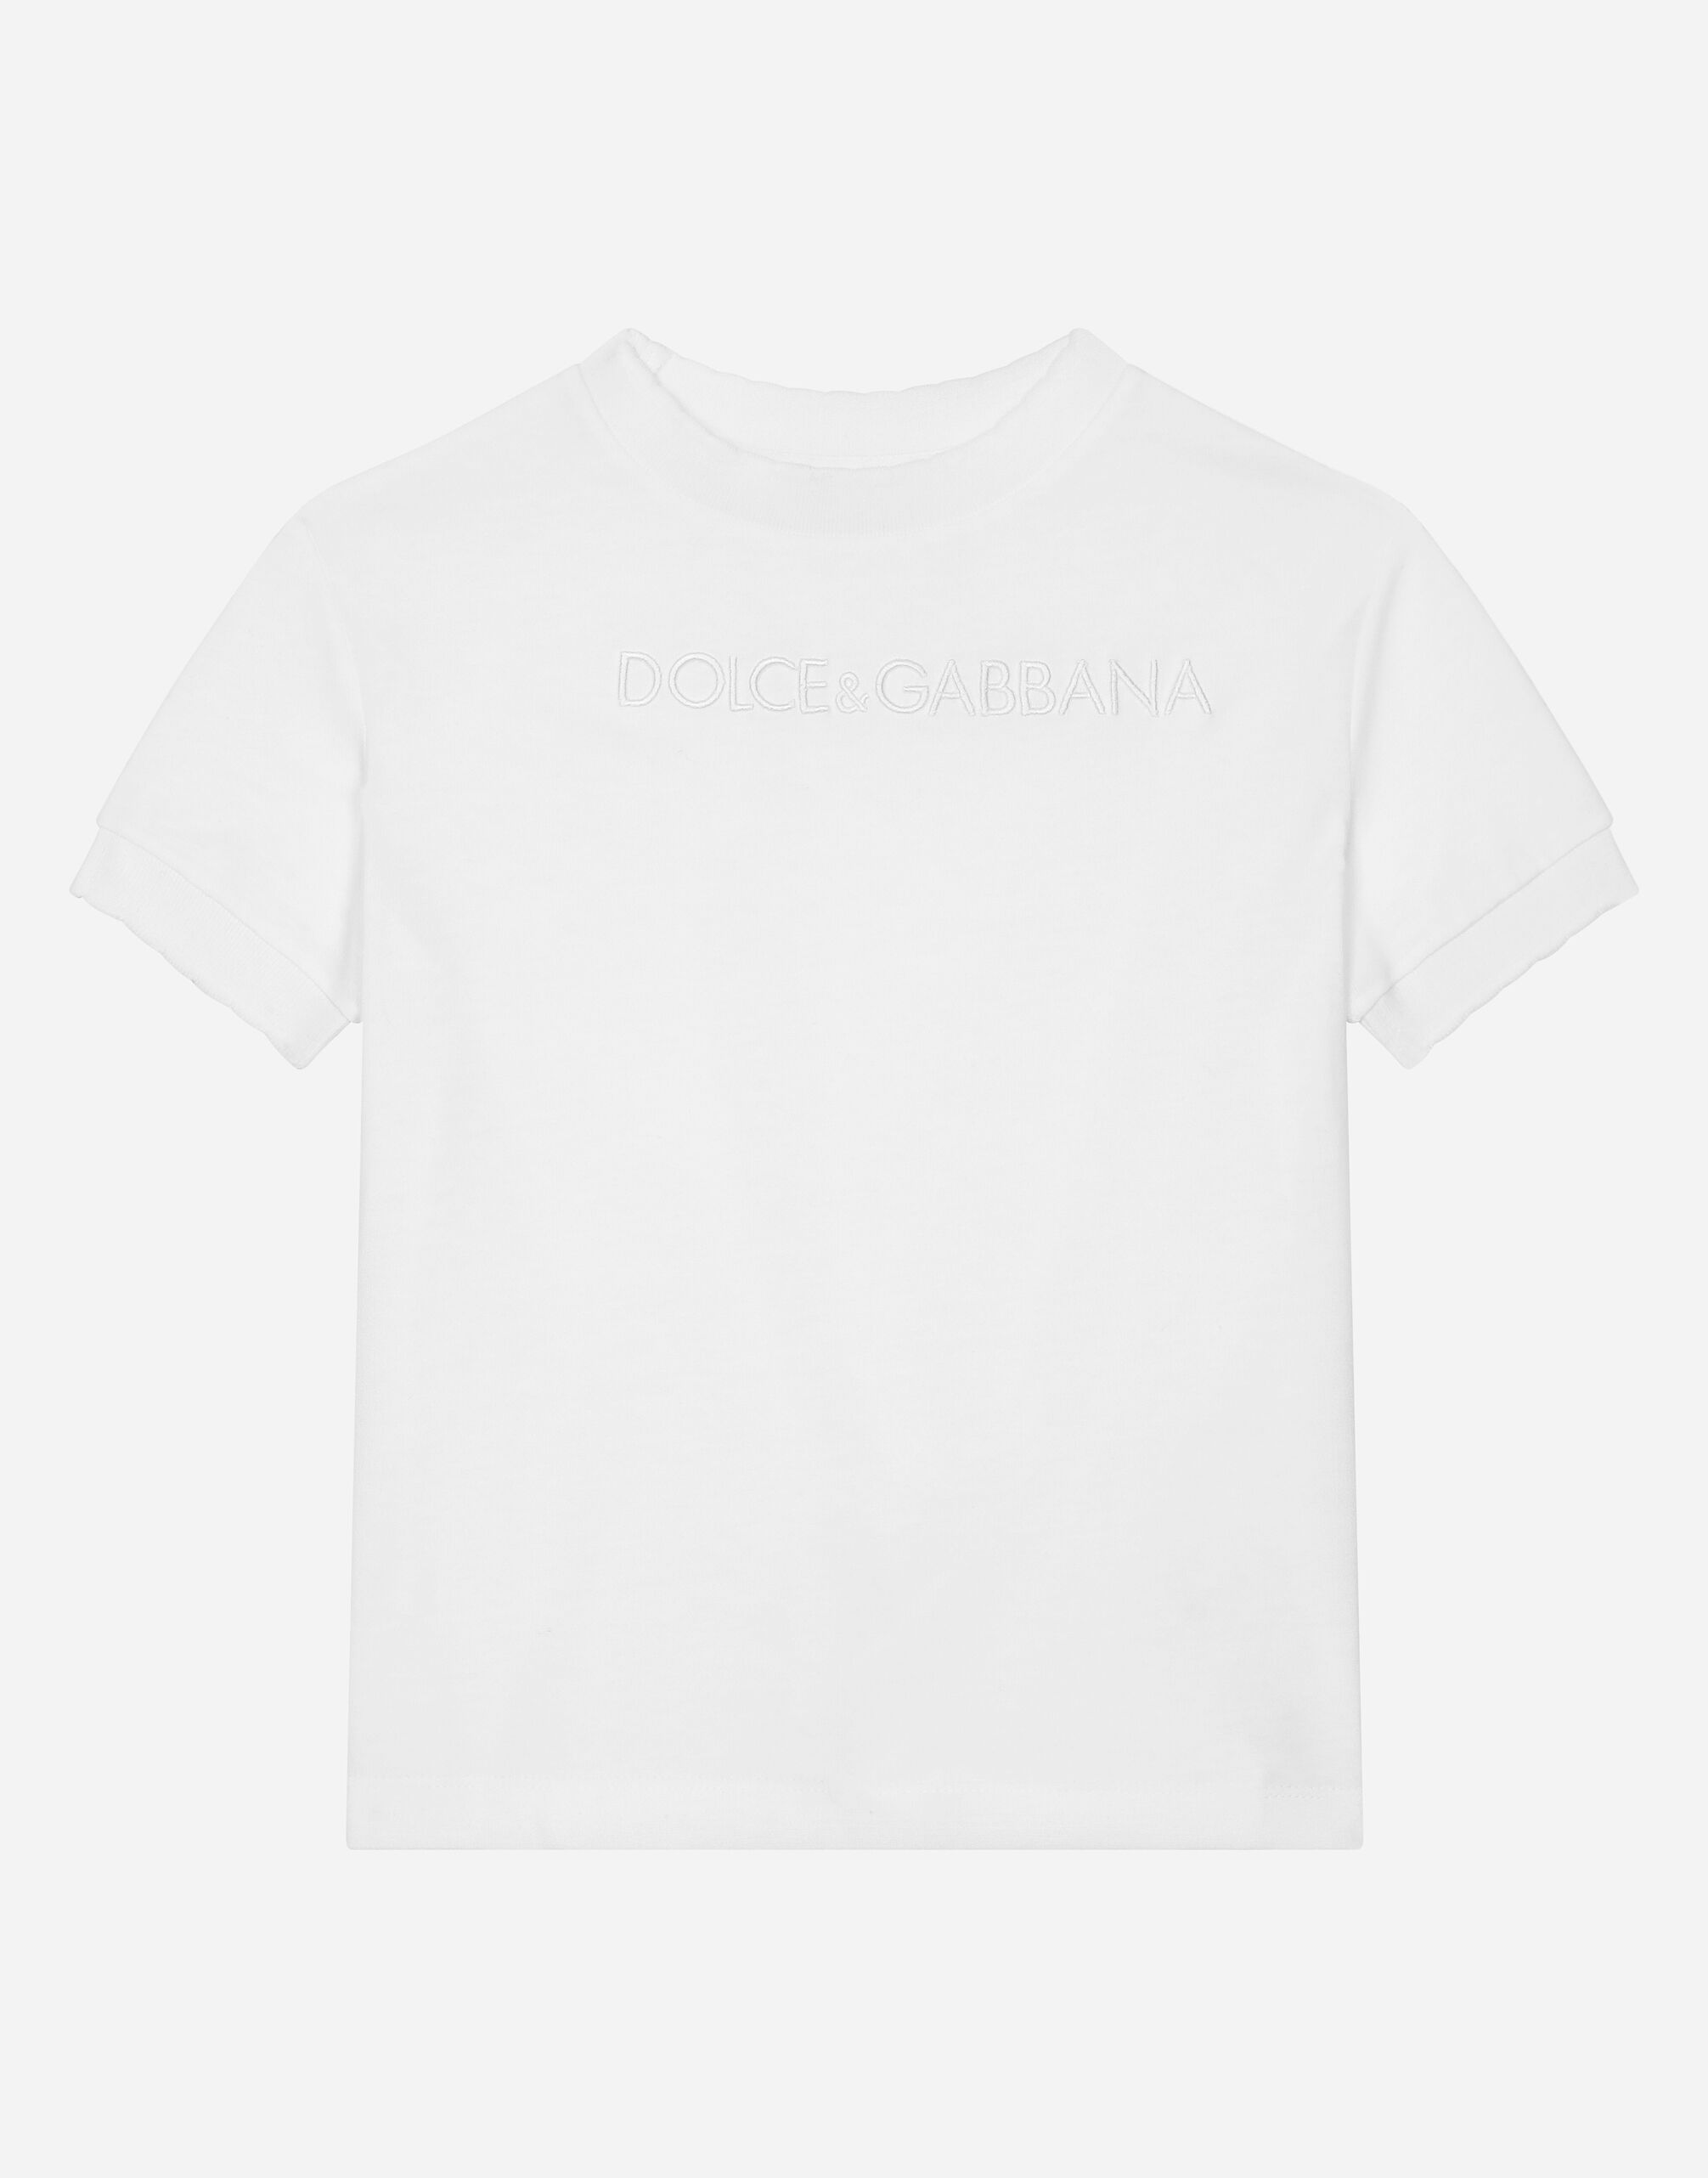 ${brand} Dolce&Gabbanaロゴ ジャージー Tシャツ ${colorDescription} ${masterID}